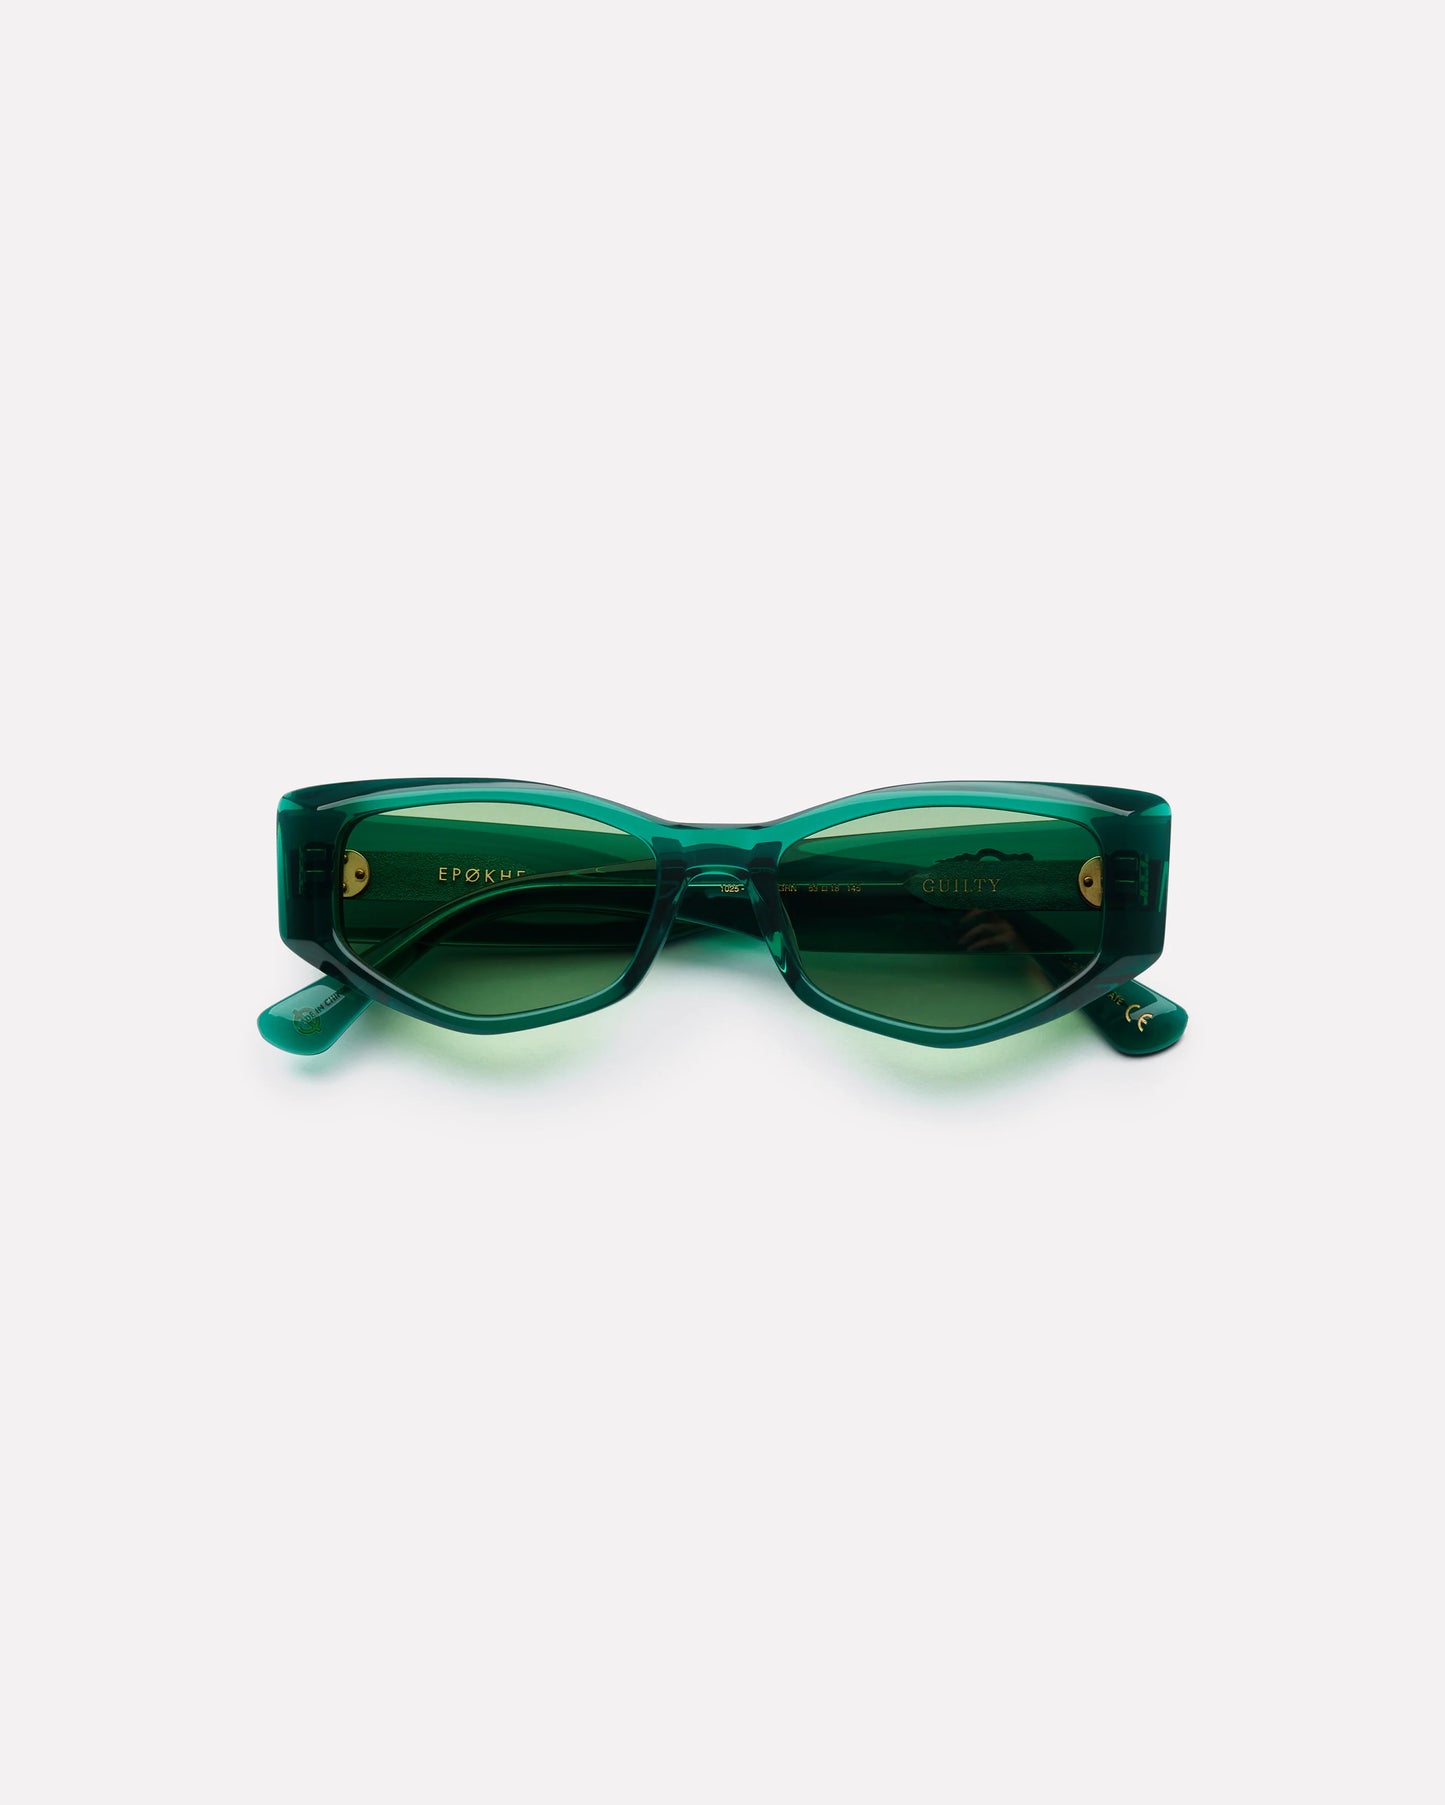 EPOKHE EYEWEAR - GUILTY - Thomas Townend - Emerald Polished Green